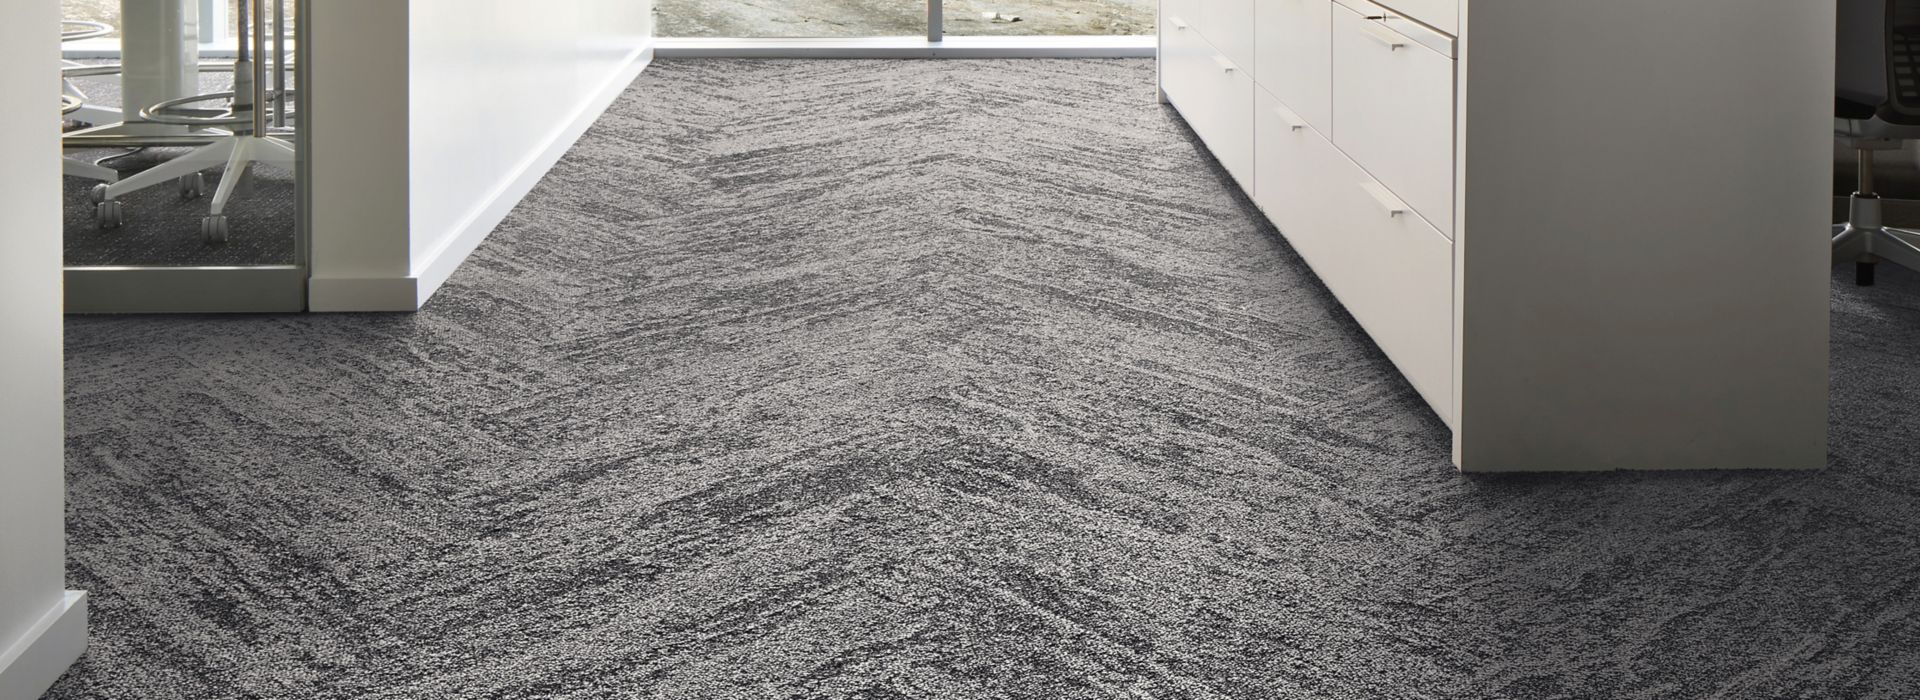 Interface Rock Springs plank carpet tile in walkway of office 